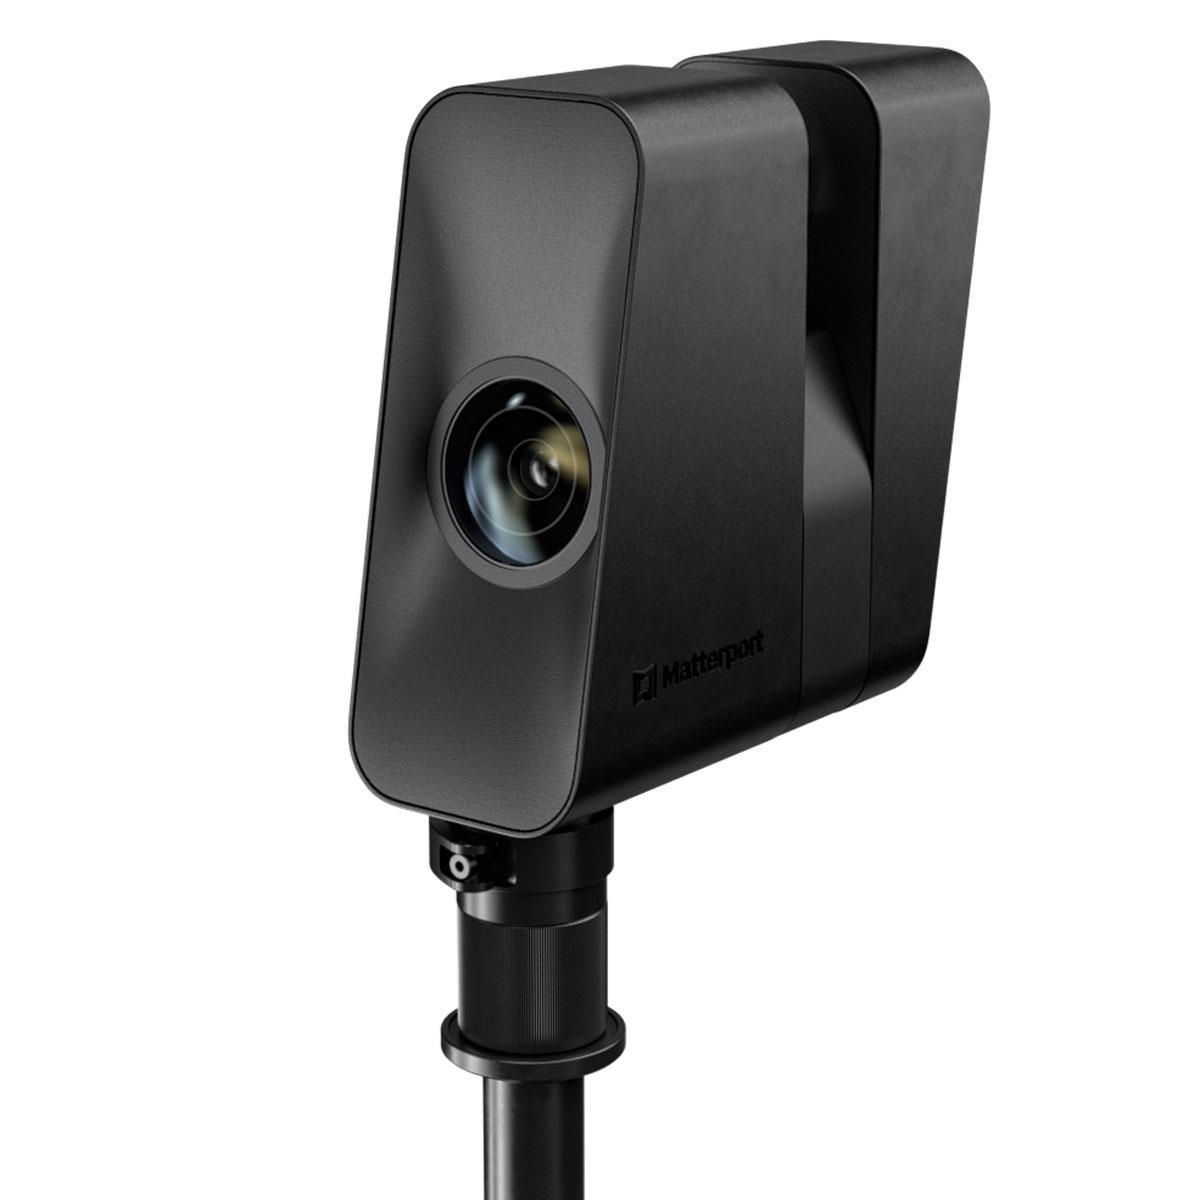 Image of Matterport Pro3 20MP Professional Capture 3D Camera